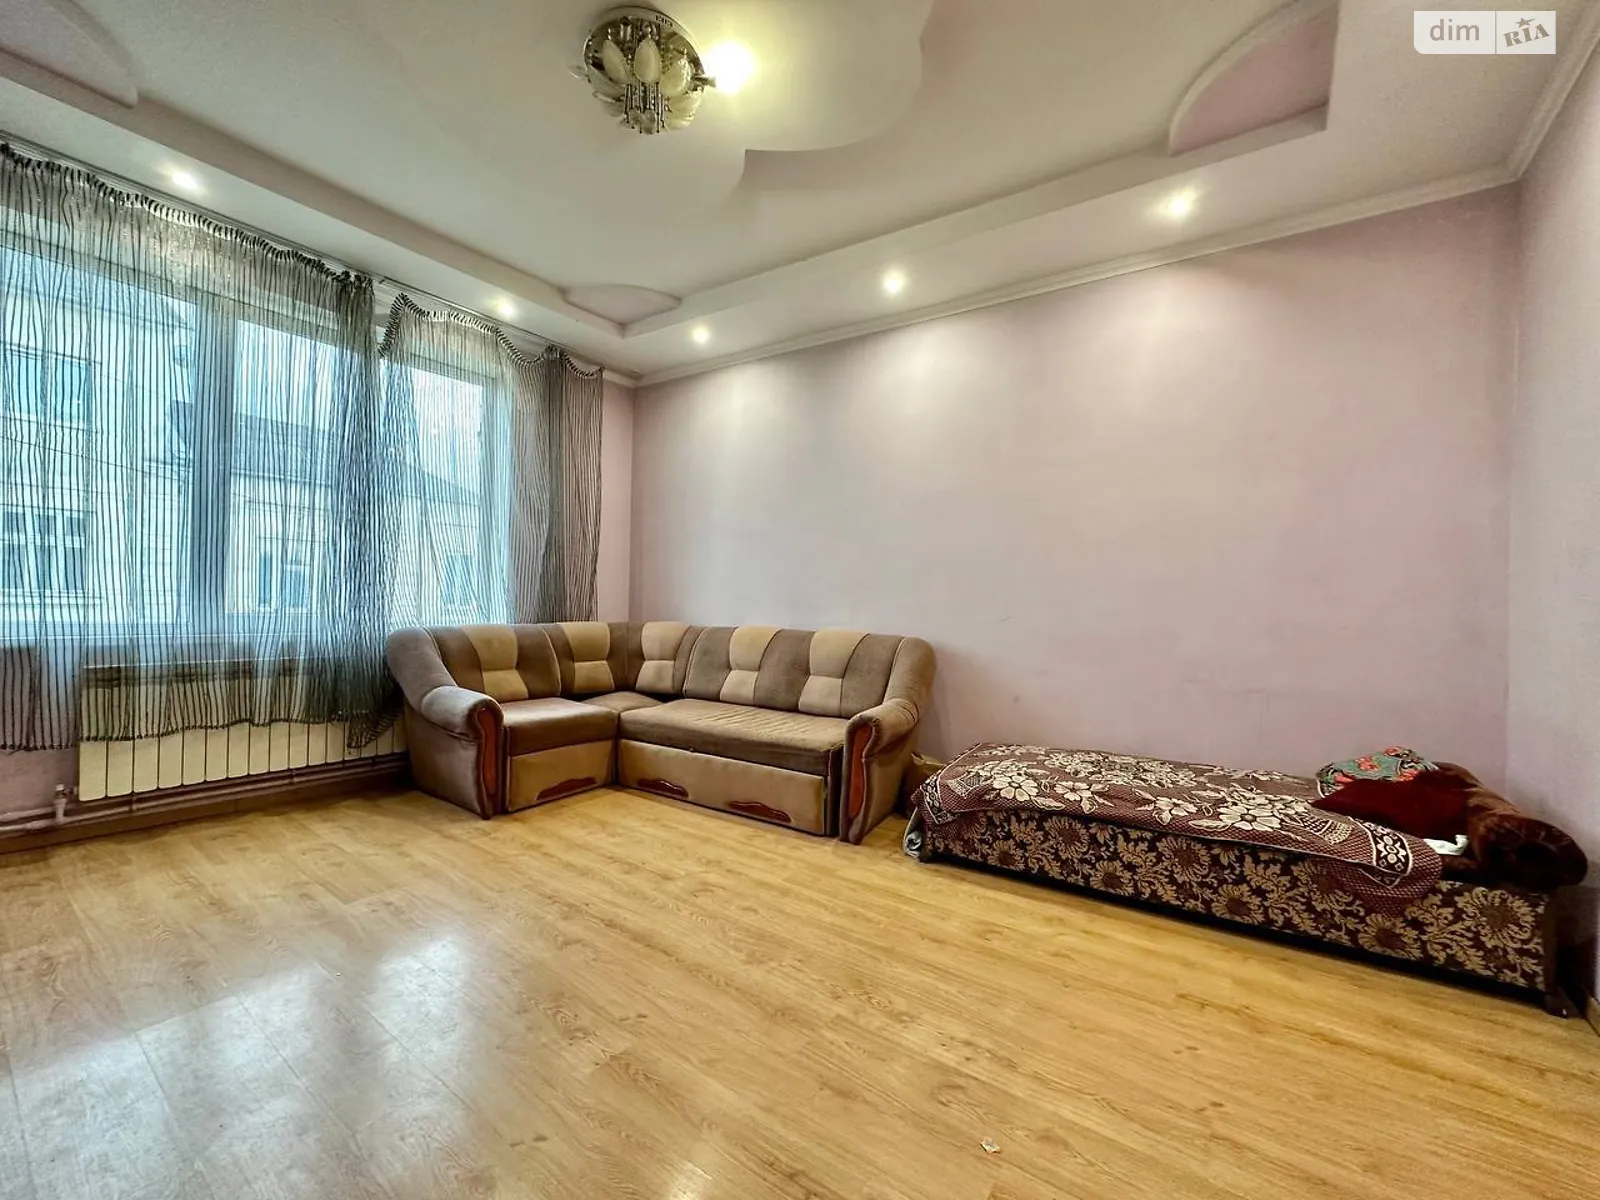 Продается 3-комнатная квартира 76.5 кв. м в Ходорове - фото 3